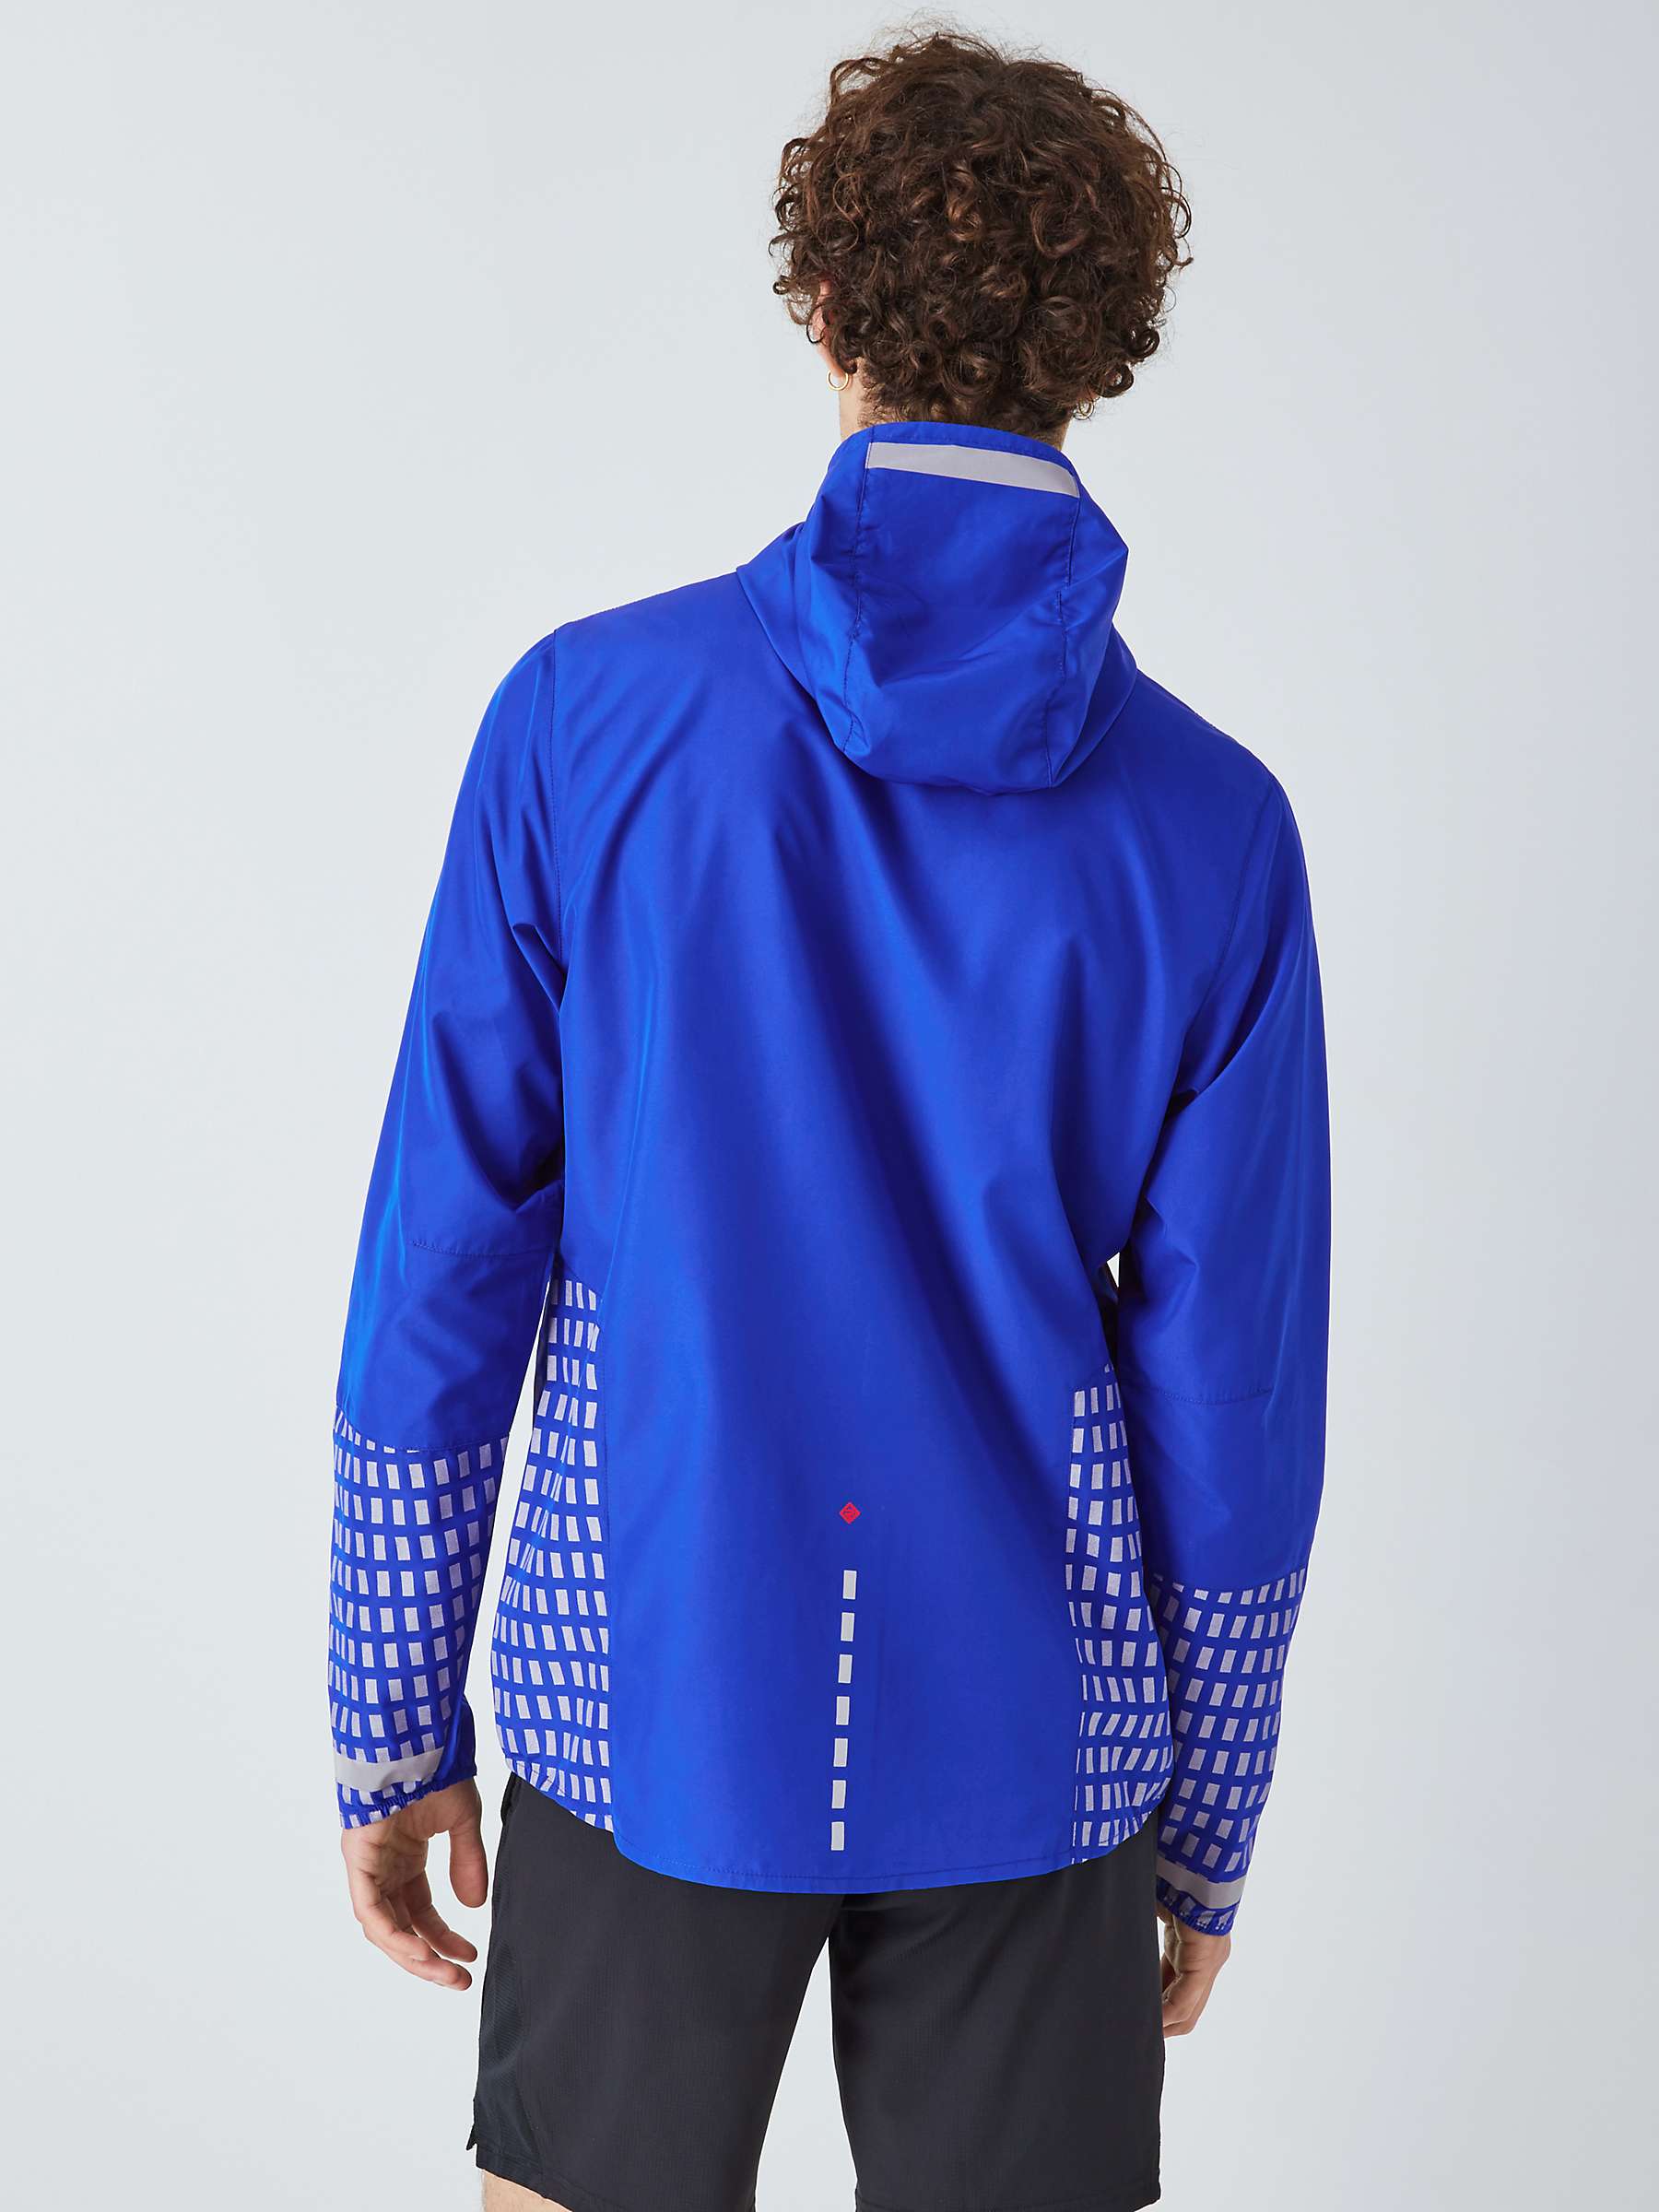 Buy Ronhill Men's Reflective Running Jacket, Cobalt Online at johnlewis.com